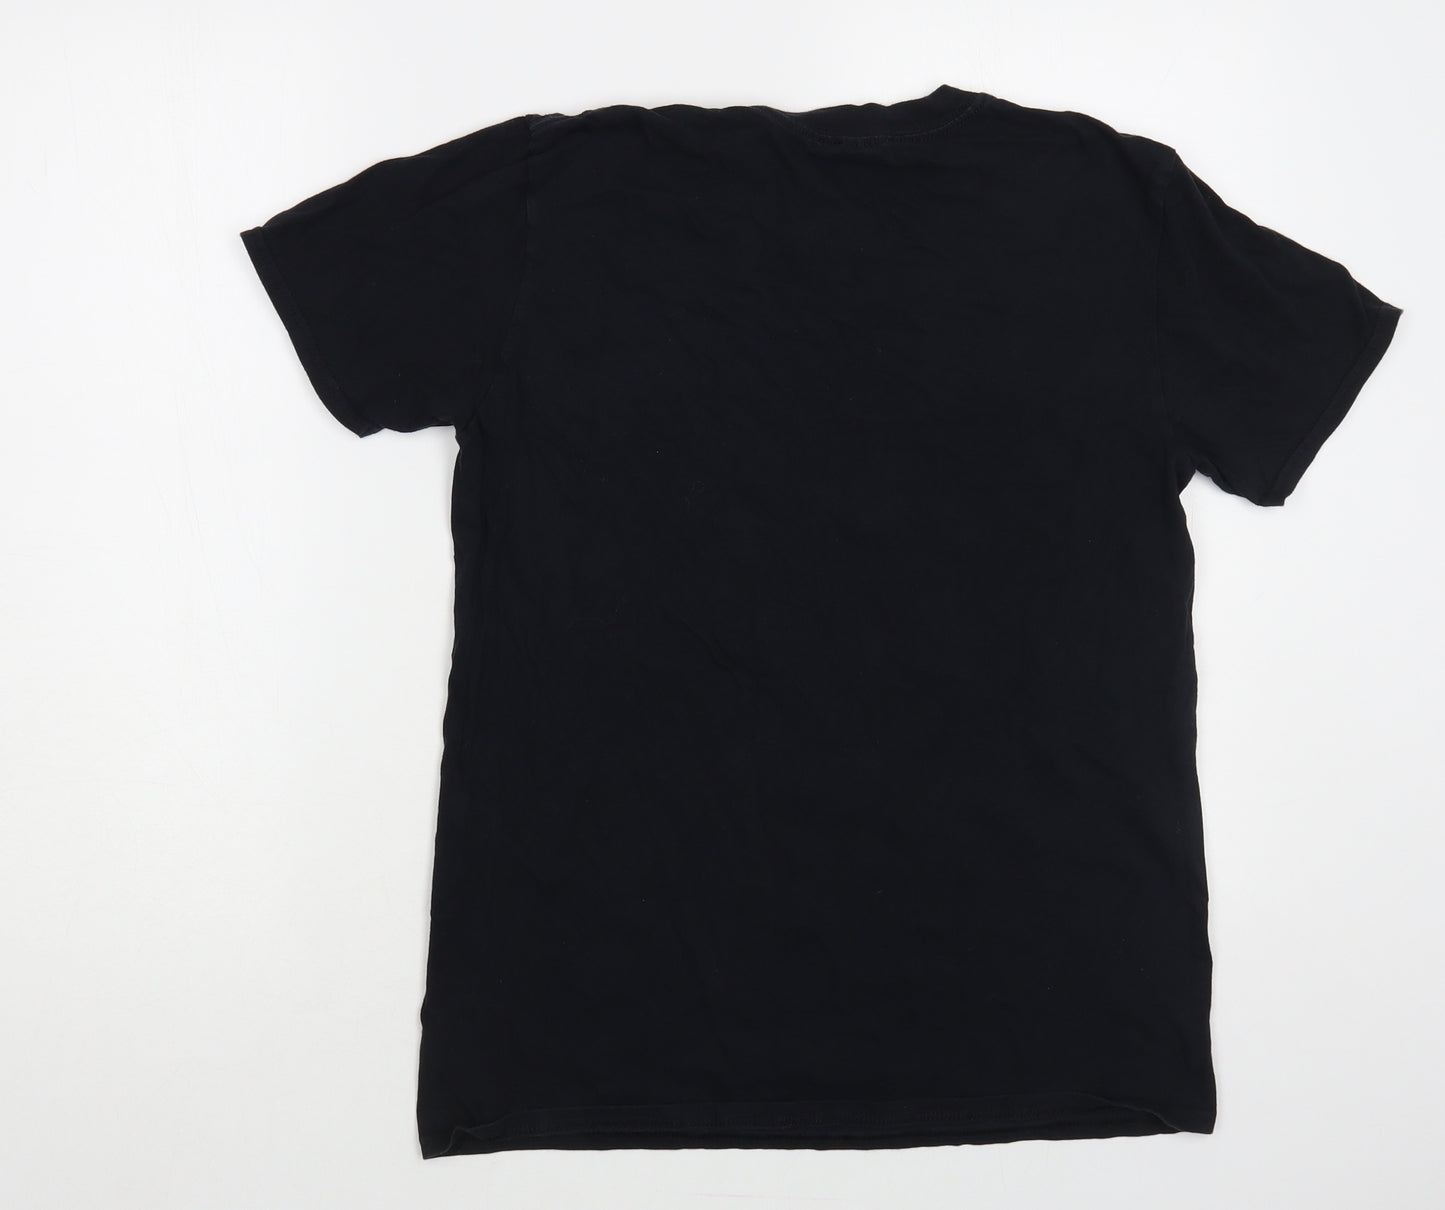 Gildan Mens Black Cotton T-Shirt Size M Crew Neck - The Heartbreak Kid